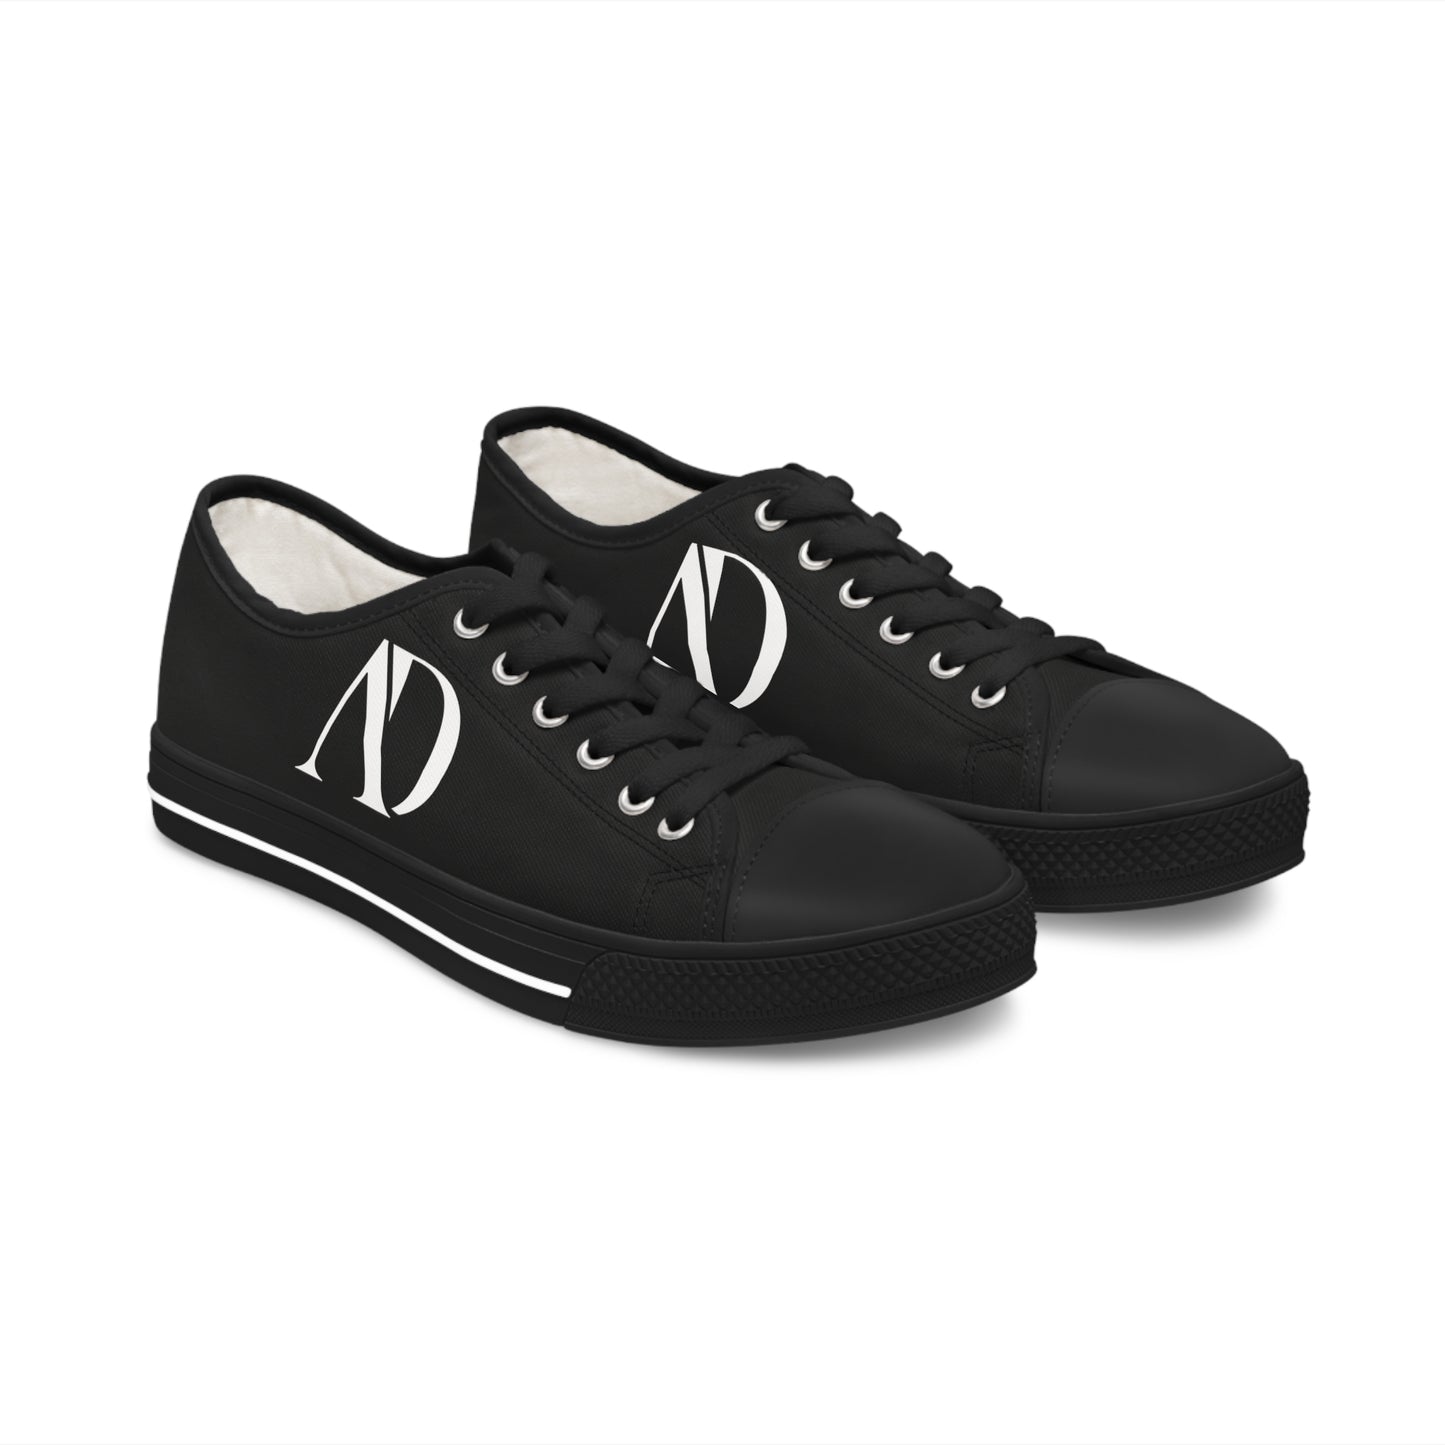 DeCrypt De Classic™ Black on Black Low Top Sneakers For Women